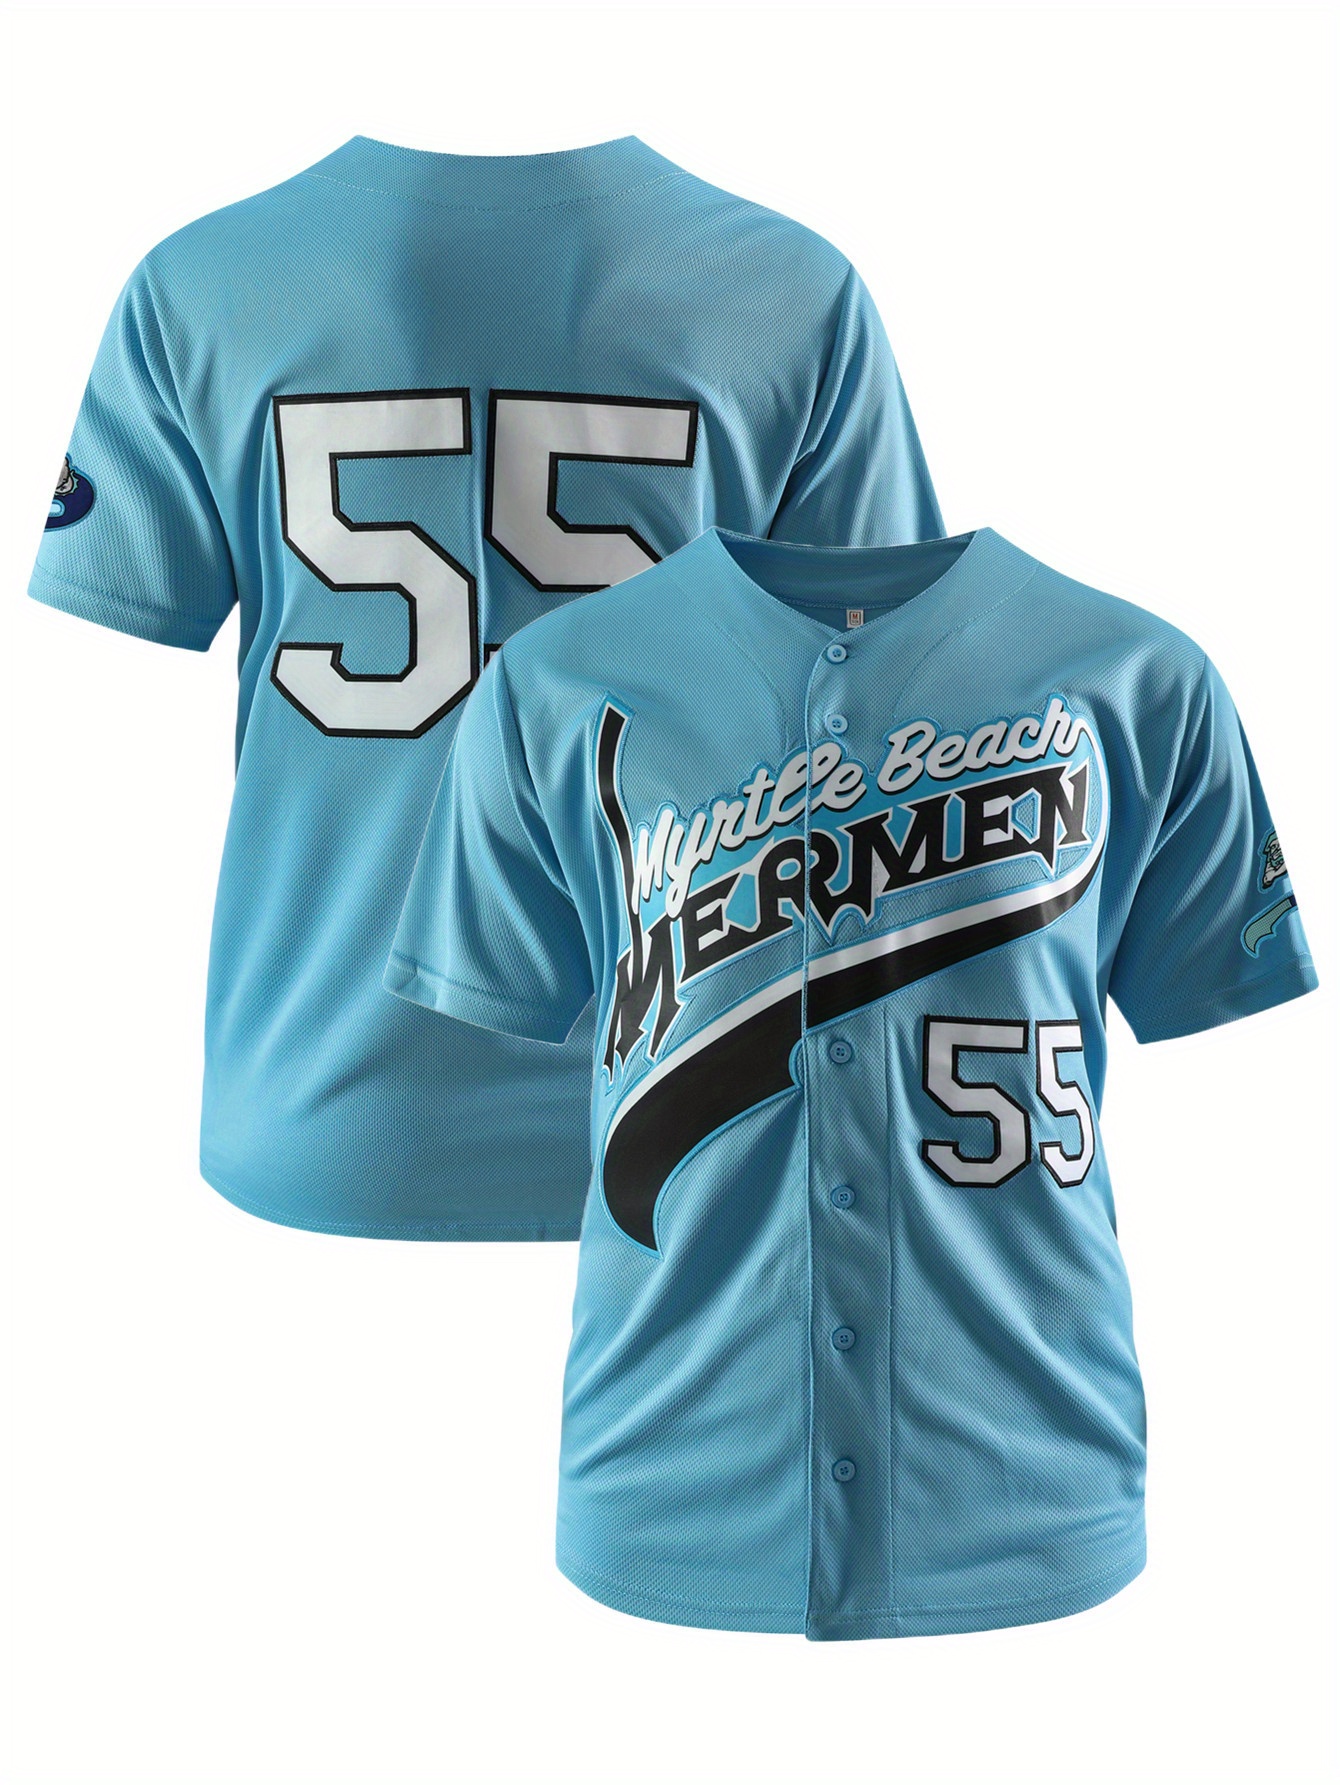 Men's #55 Classic Design Baseball Jersey, Button Up Short Sleeve Uniform Baseball Shirt for Training Competition,Temu